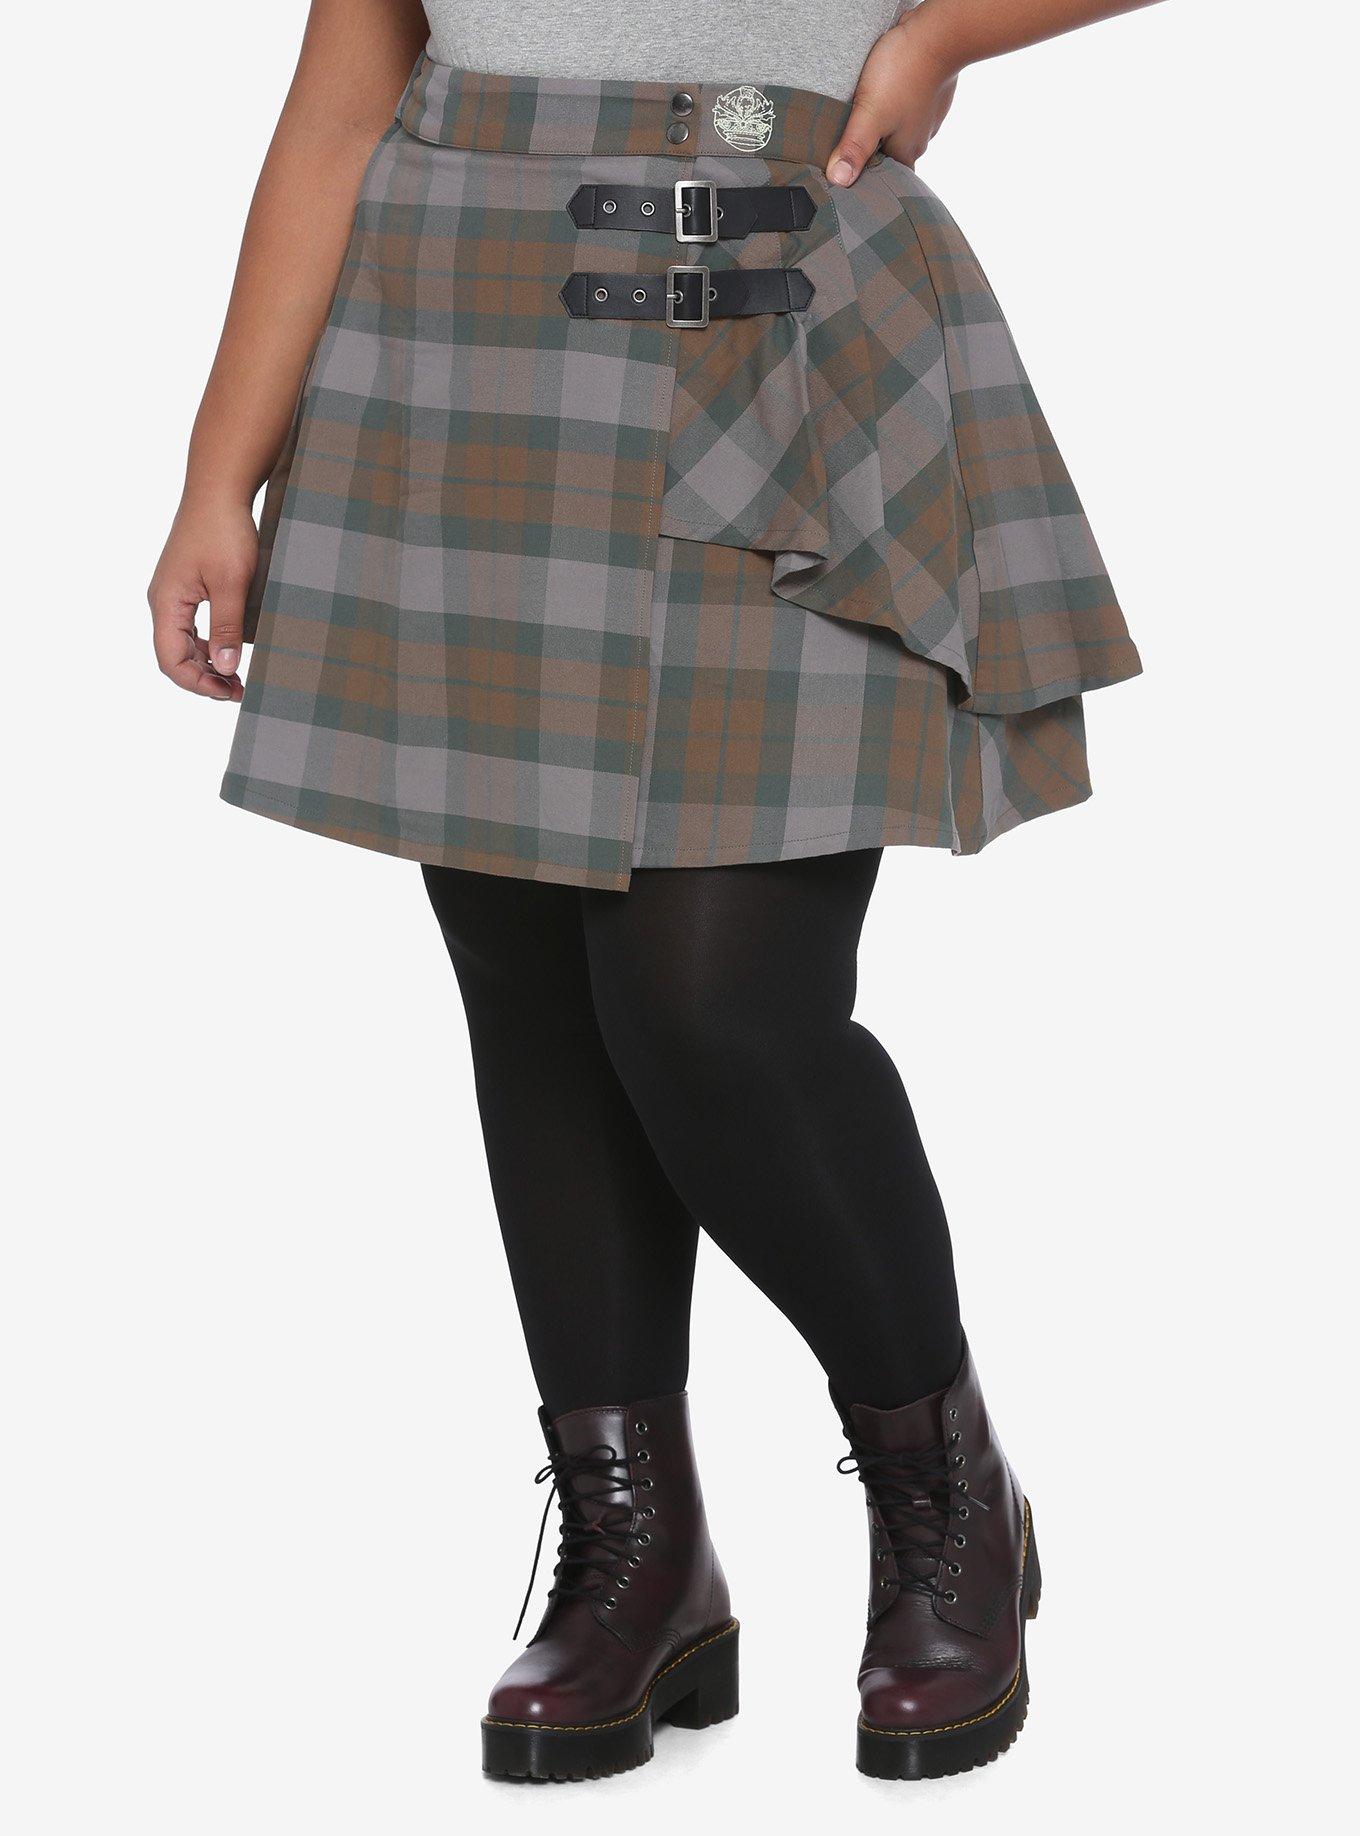 Outlander Tartan Buckle Skirt Plus Size, MULTI, hi-res